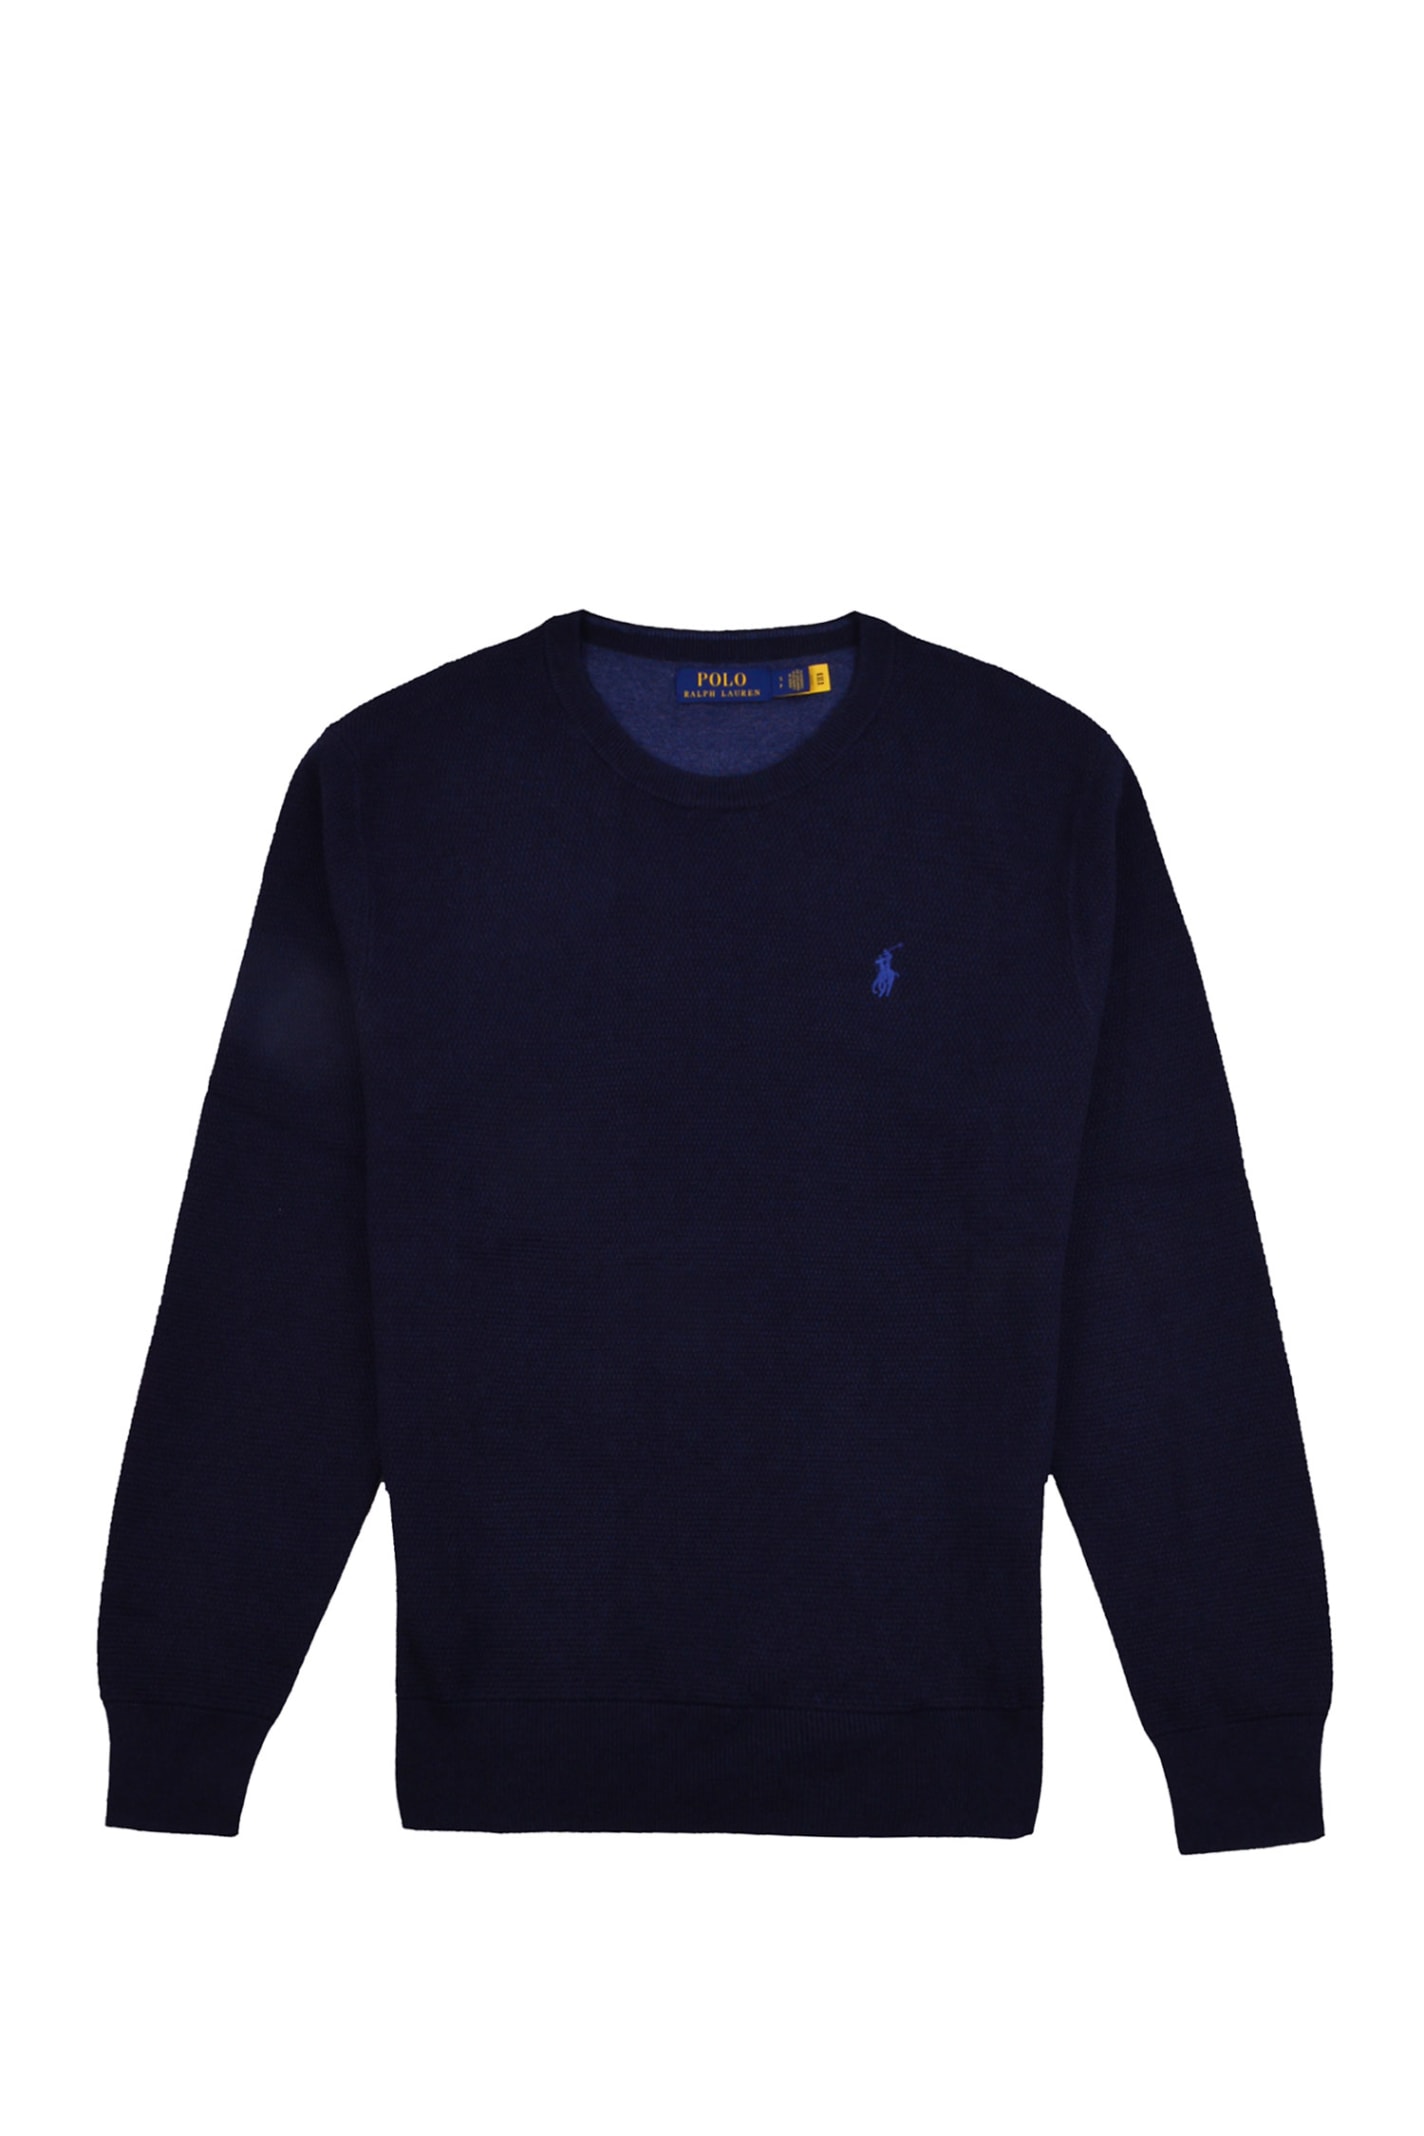 Ralph Lauren Cotton Sweater